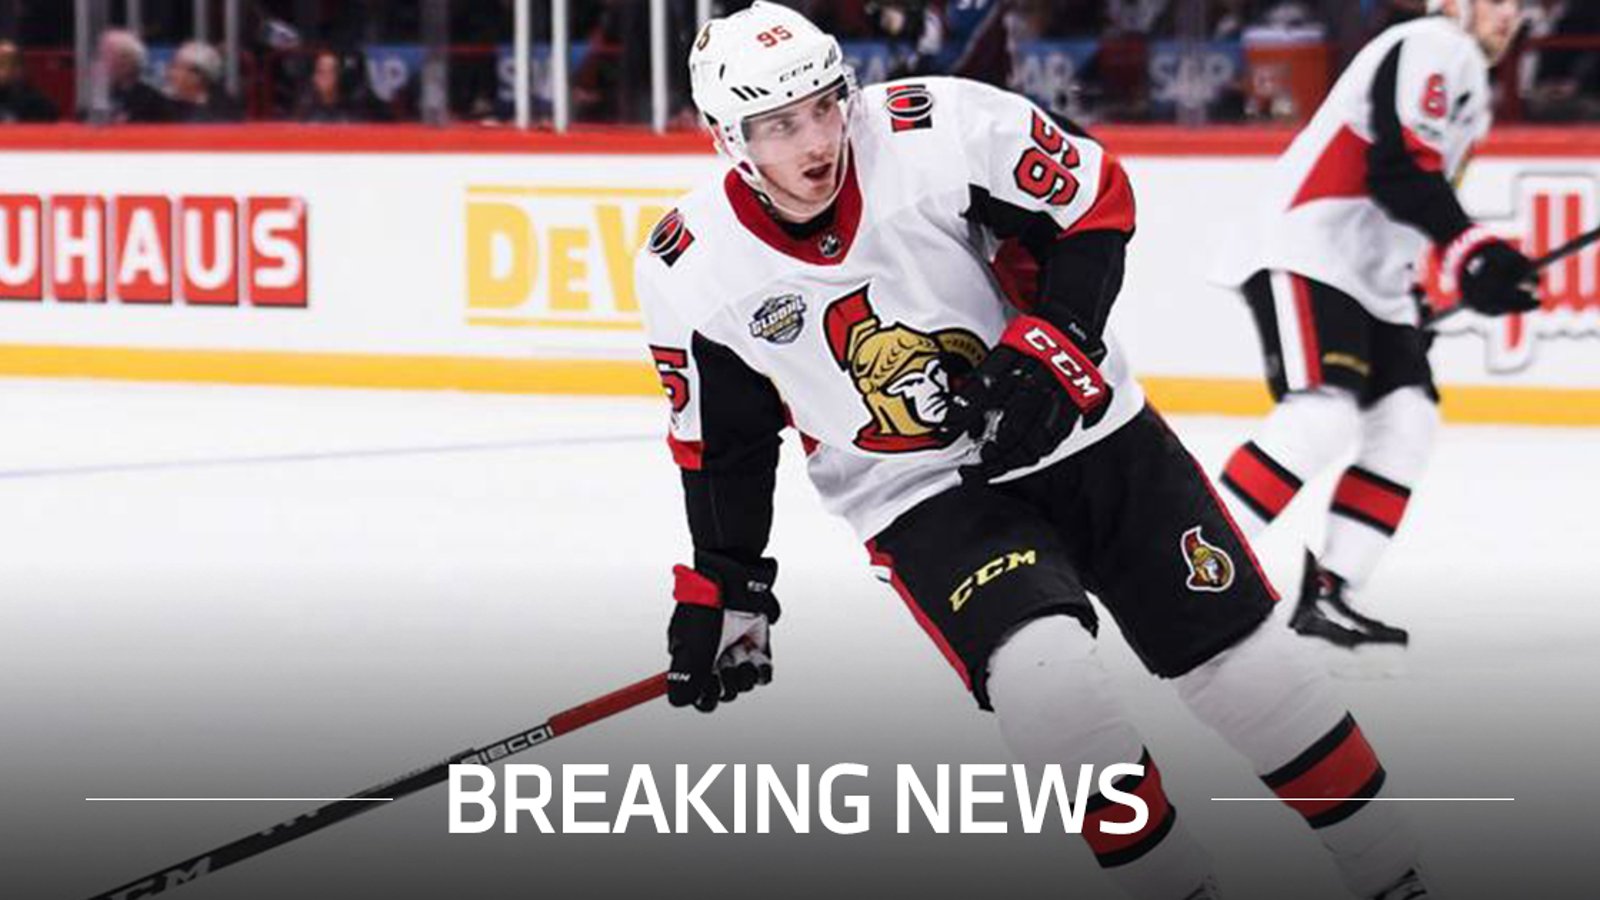 Breaking: Matt Duchene finally scored a goal with the Senators!